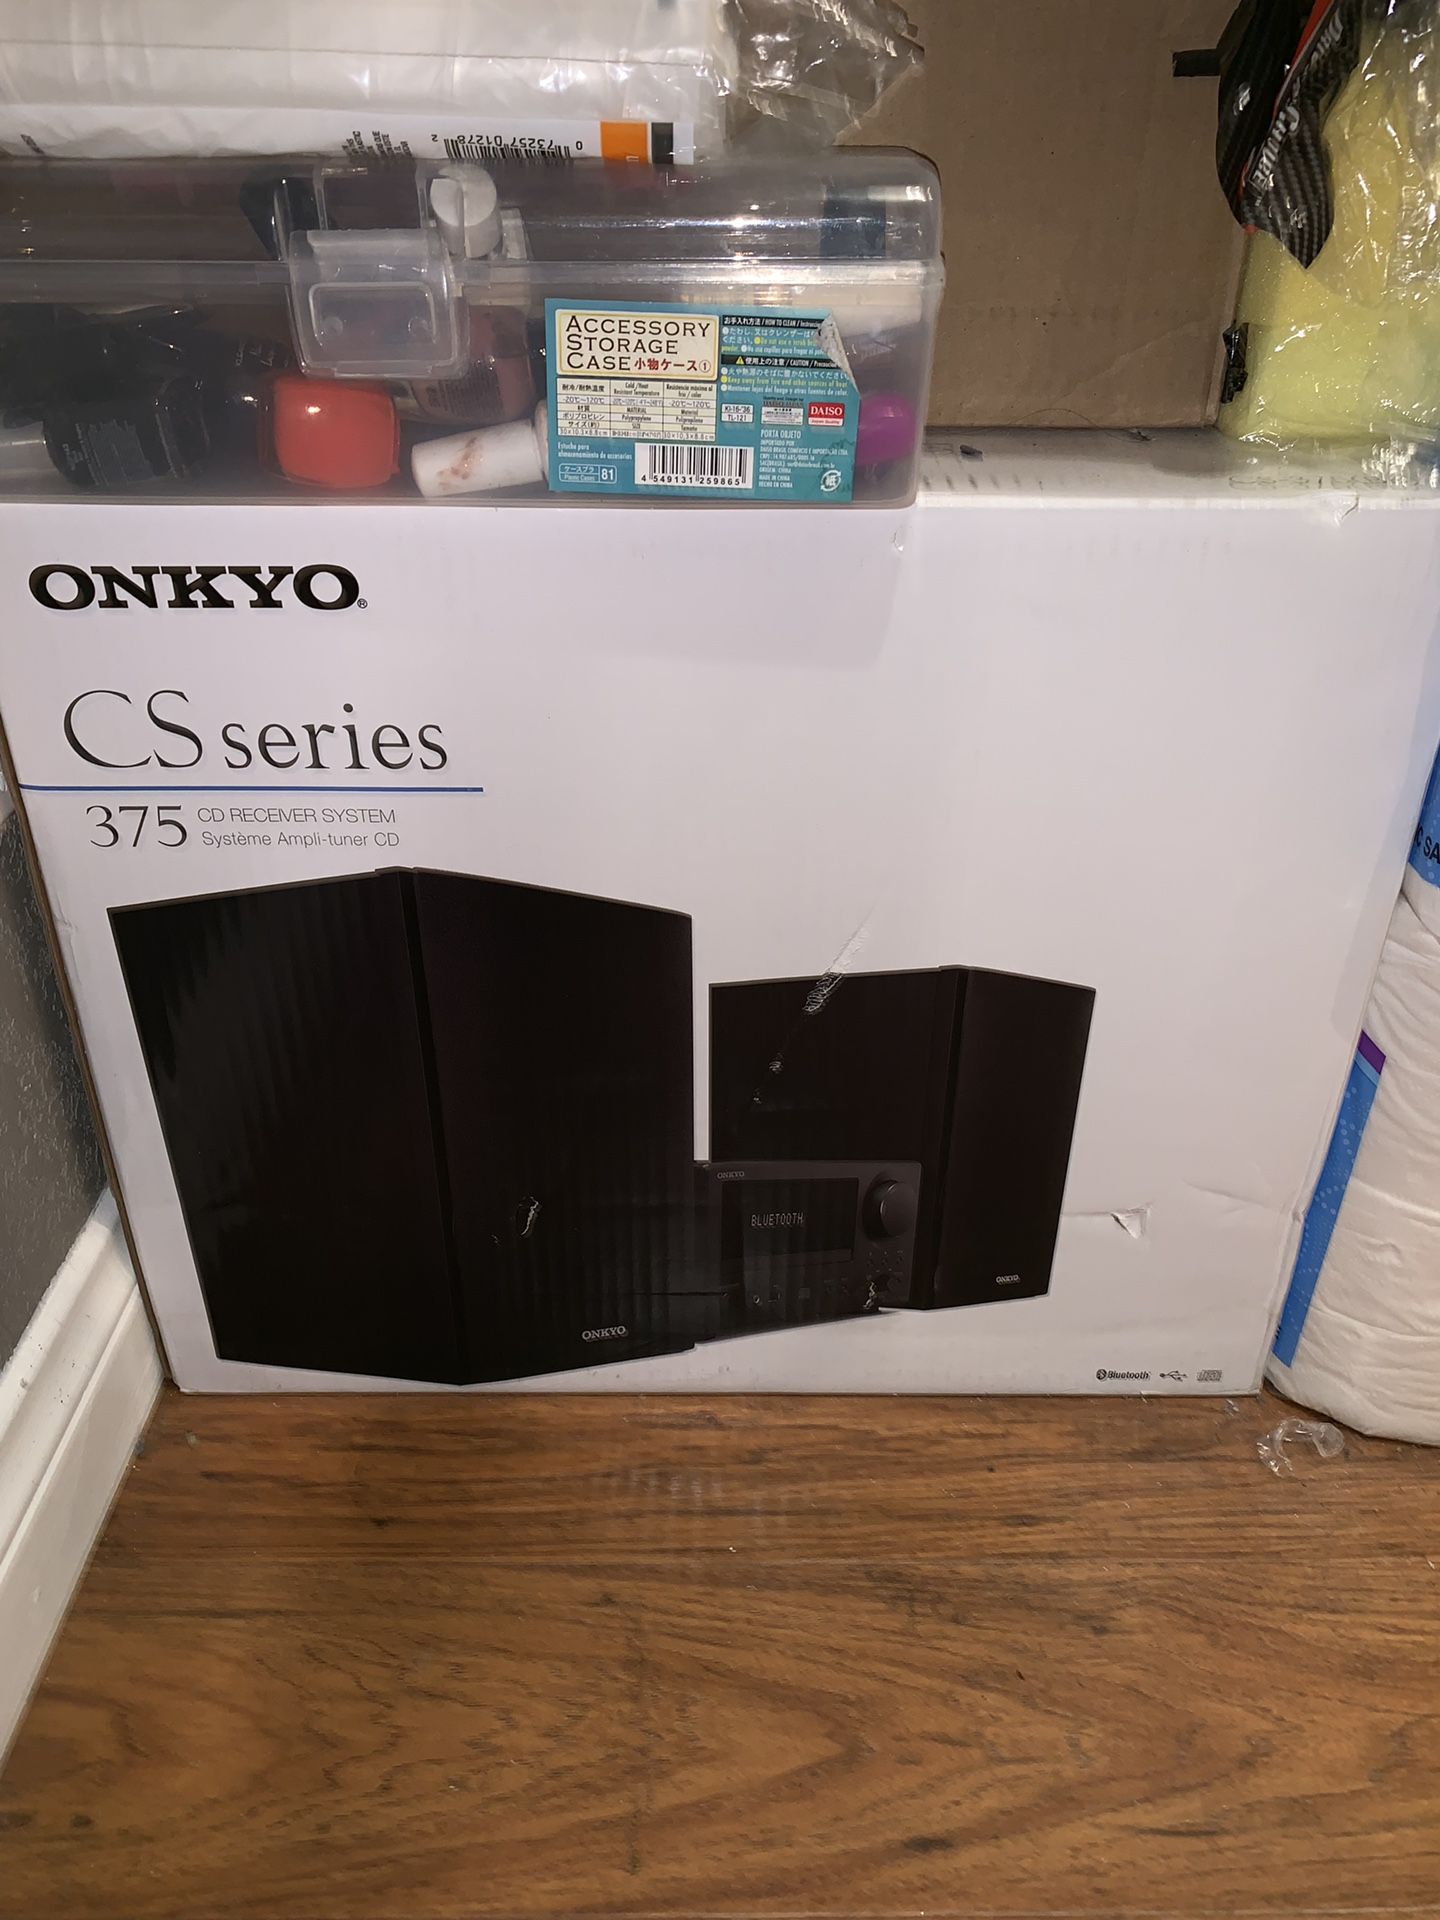 Onkyo CS series 375 home theater